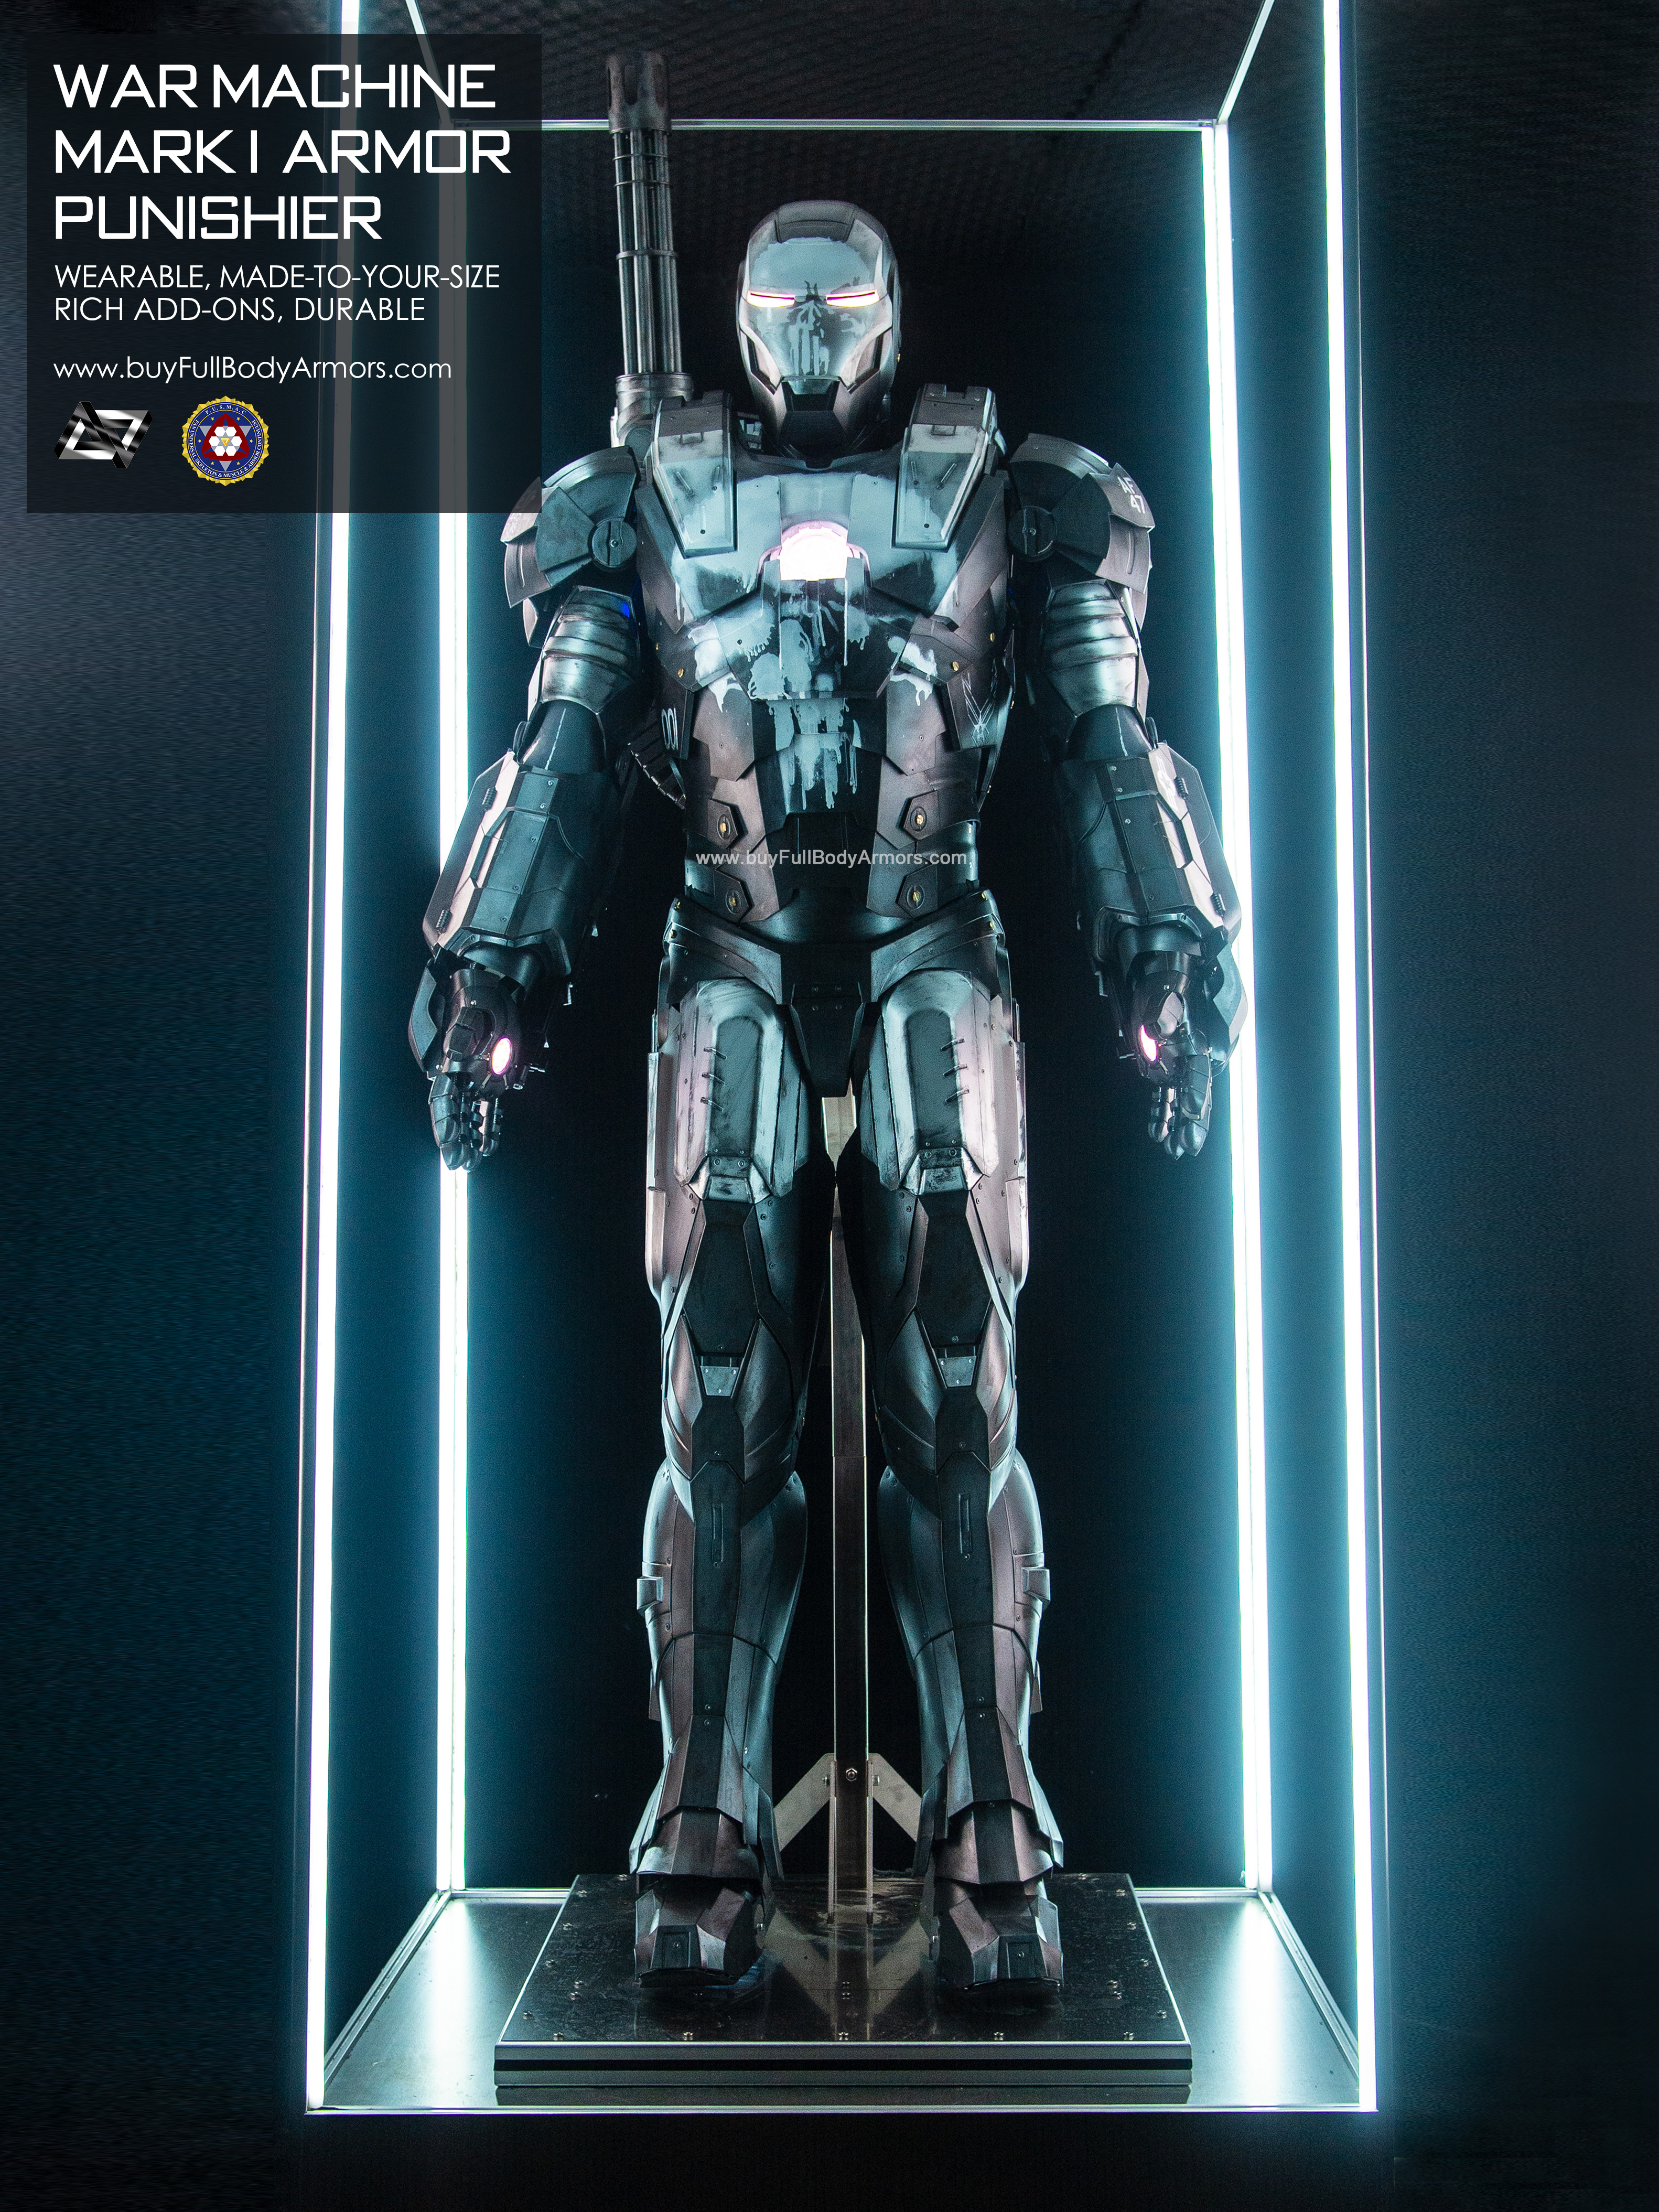 wearable War Machine suit Mark I 1 Punisher armor costume